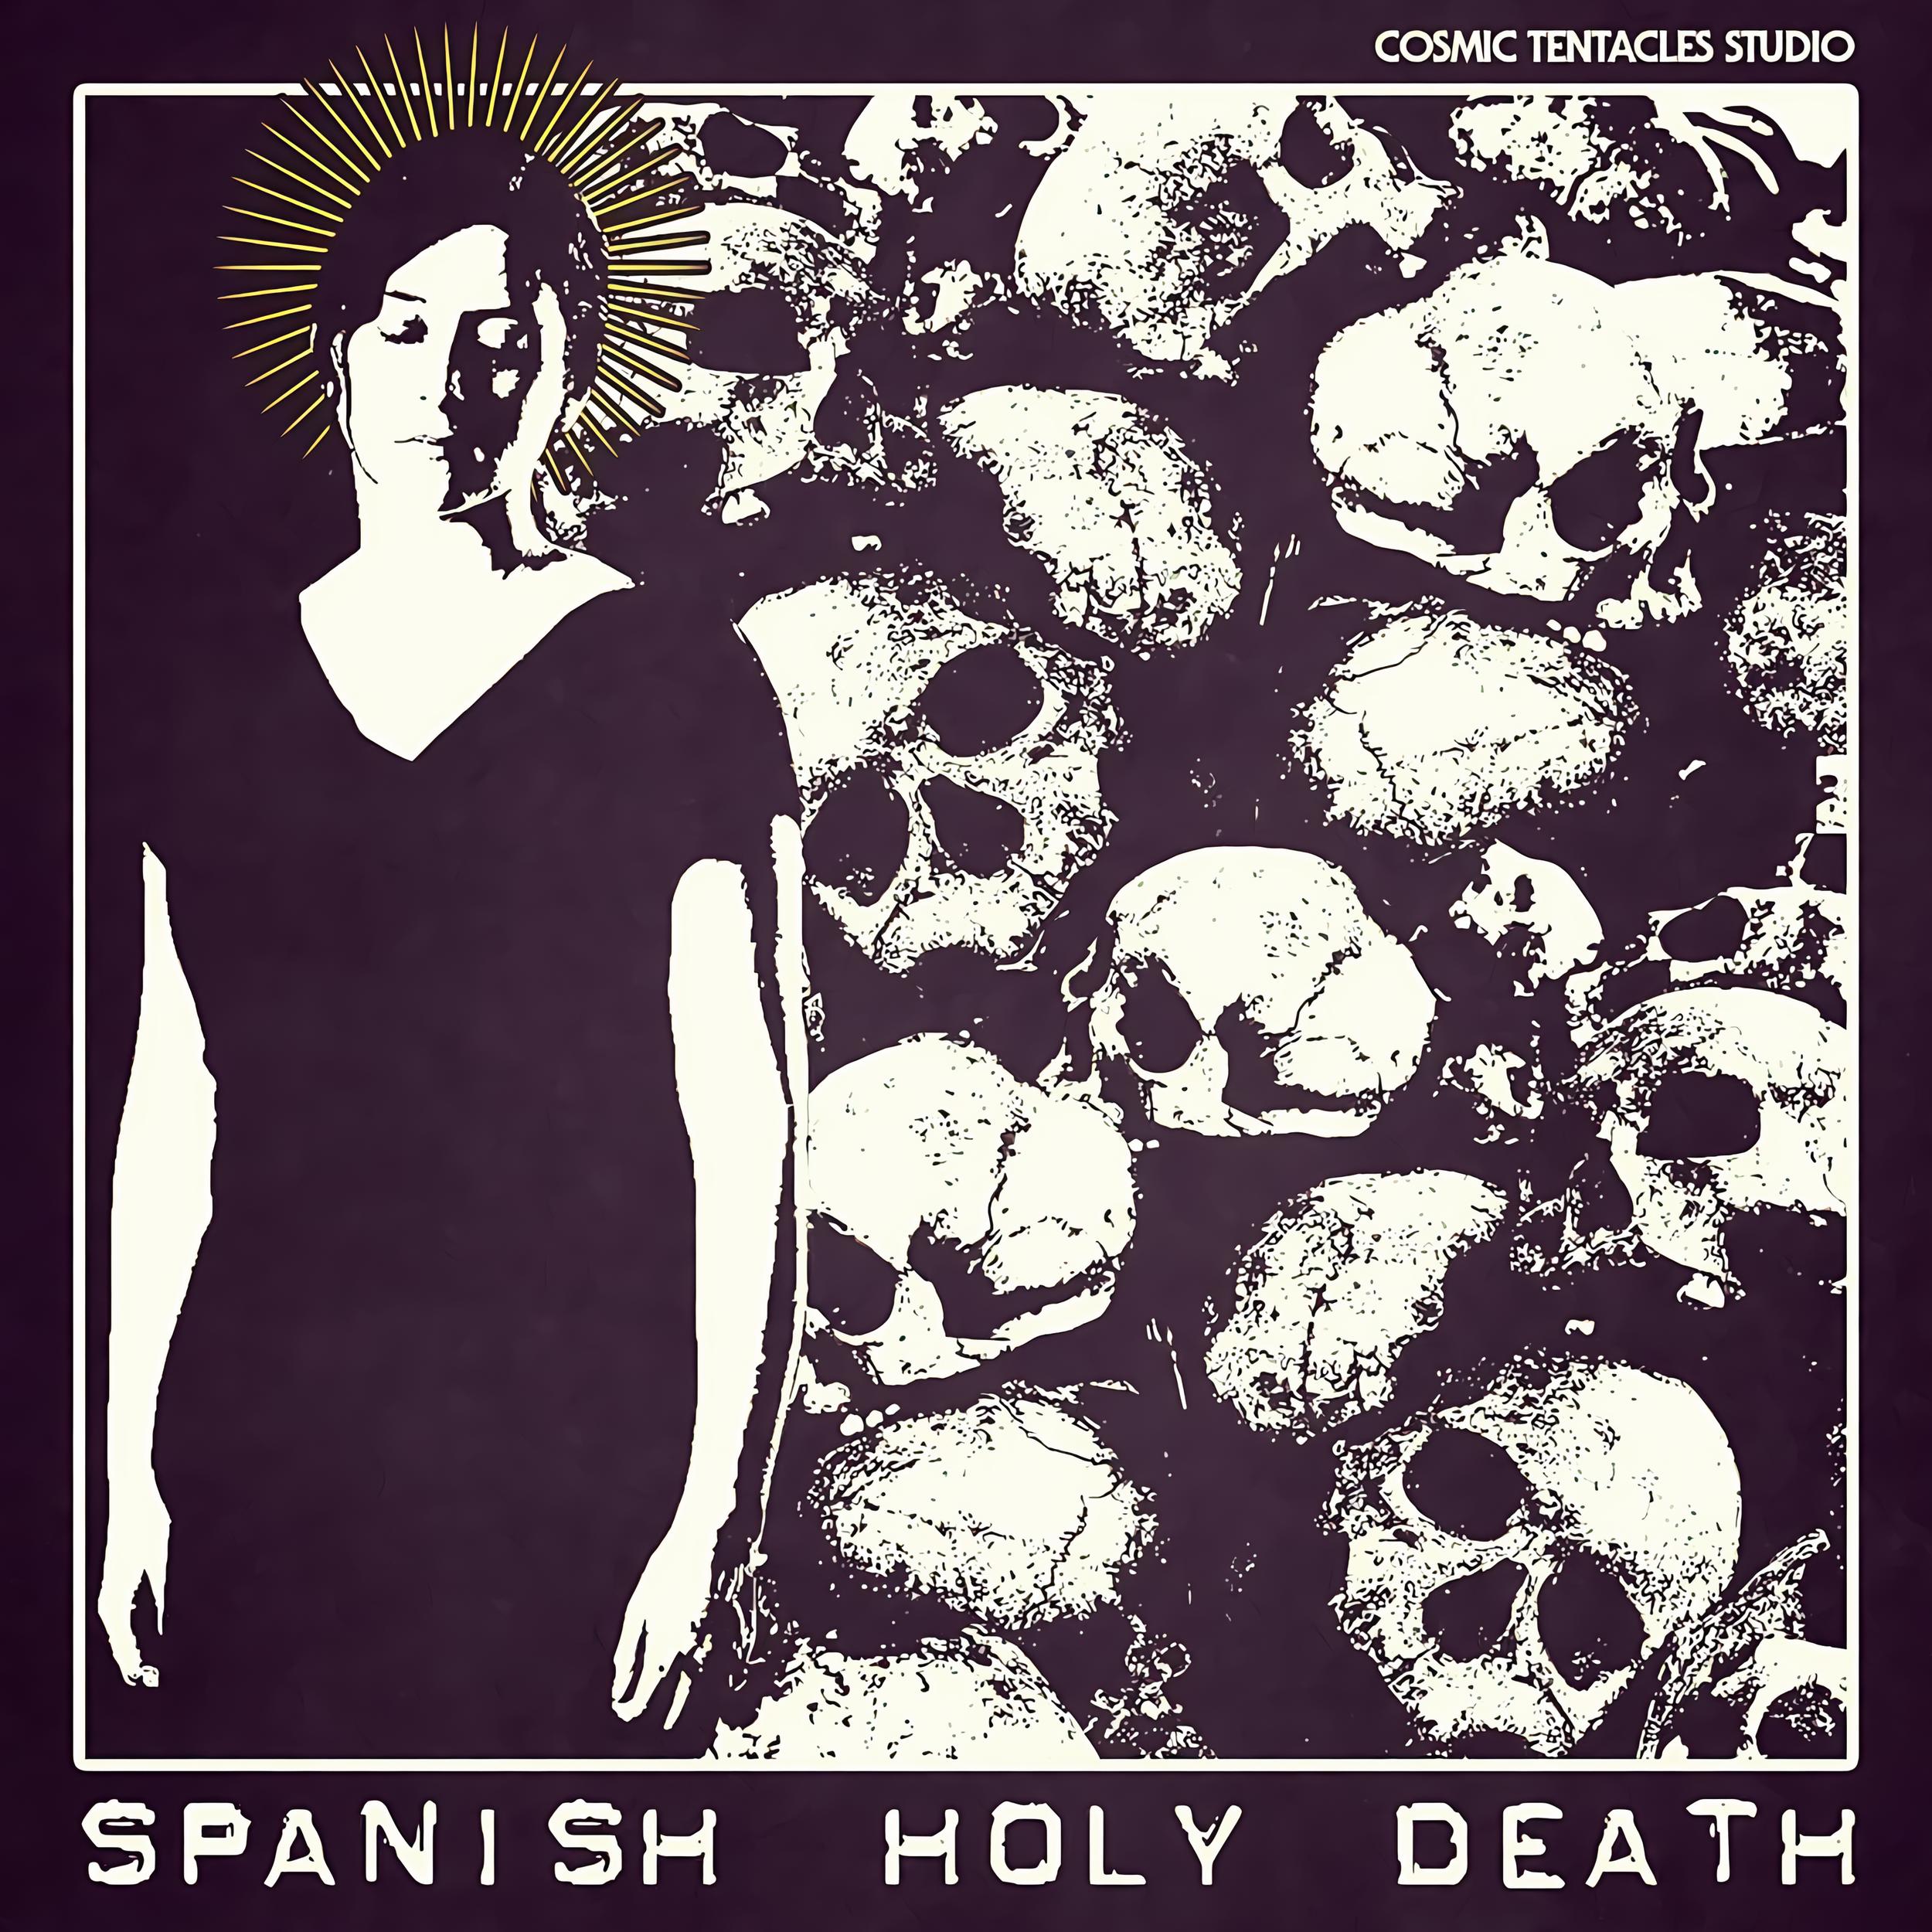 Spanish holy death